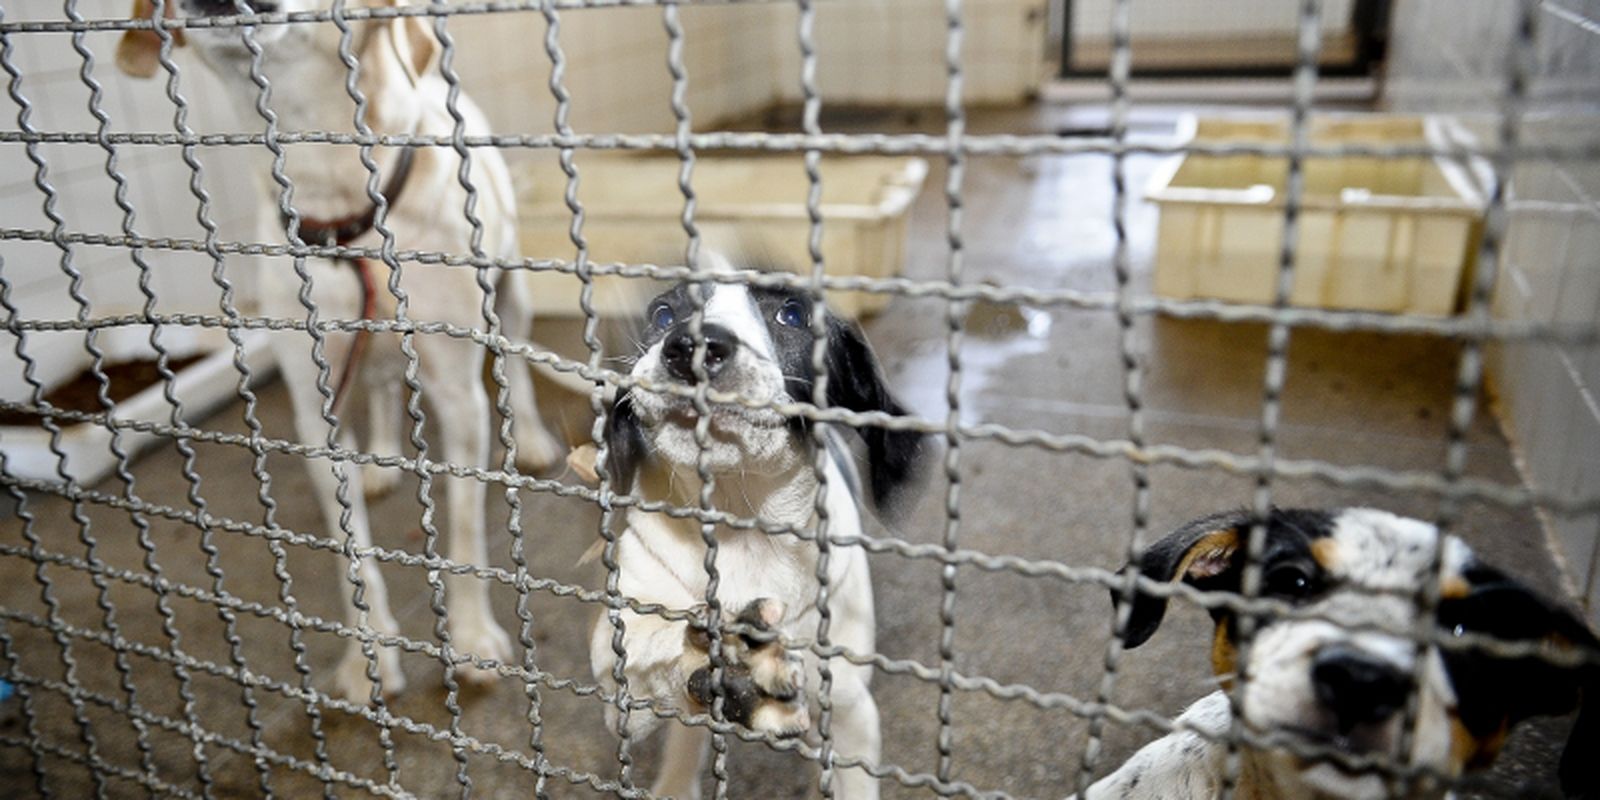 Animals are rescued at a clandestine fair in São Paulo